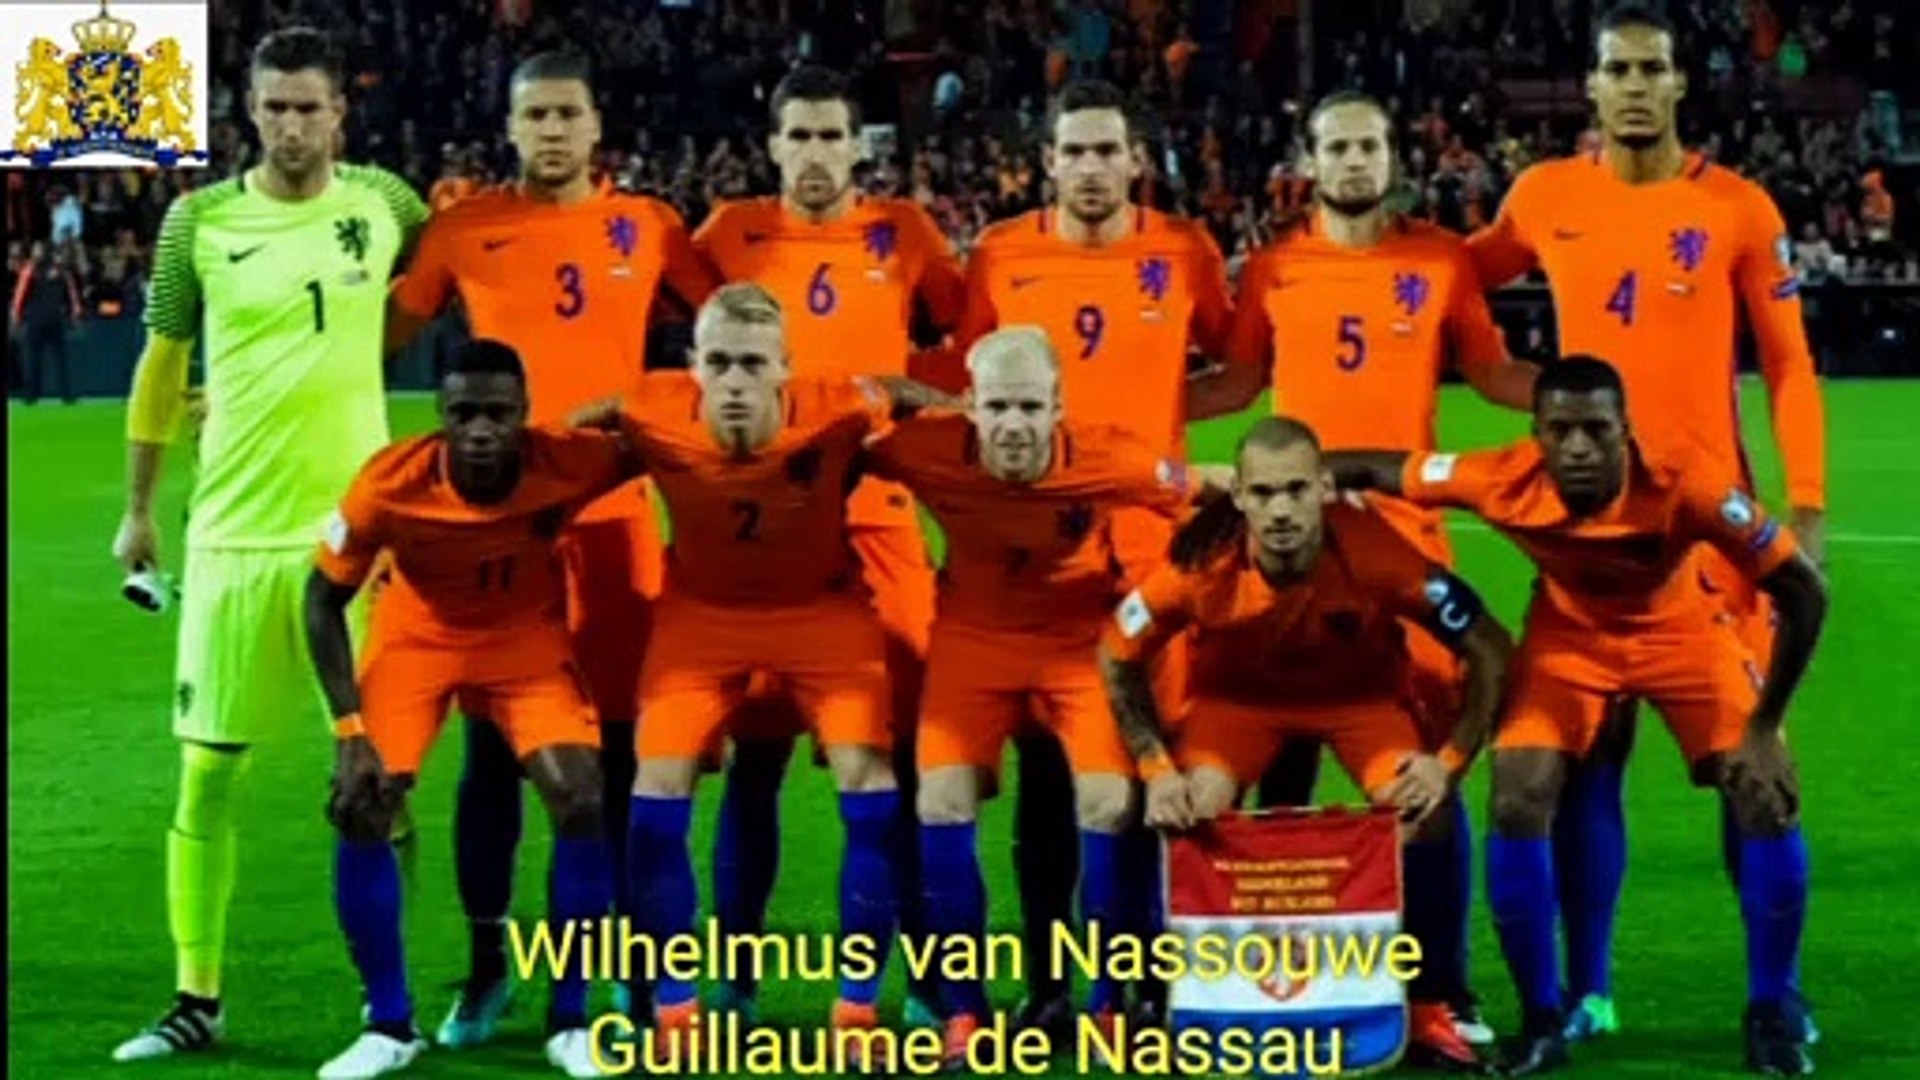 Apprendre l'Hymne National de Pays-Bas - Le Wilhelmus van Nassouwe (Lyrics  NL/Fr, instrumental, paysage) - Vidéo Dailymotion